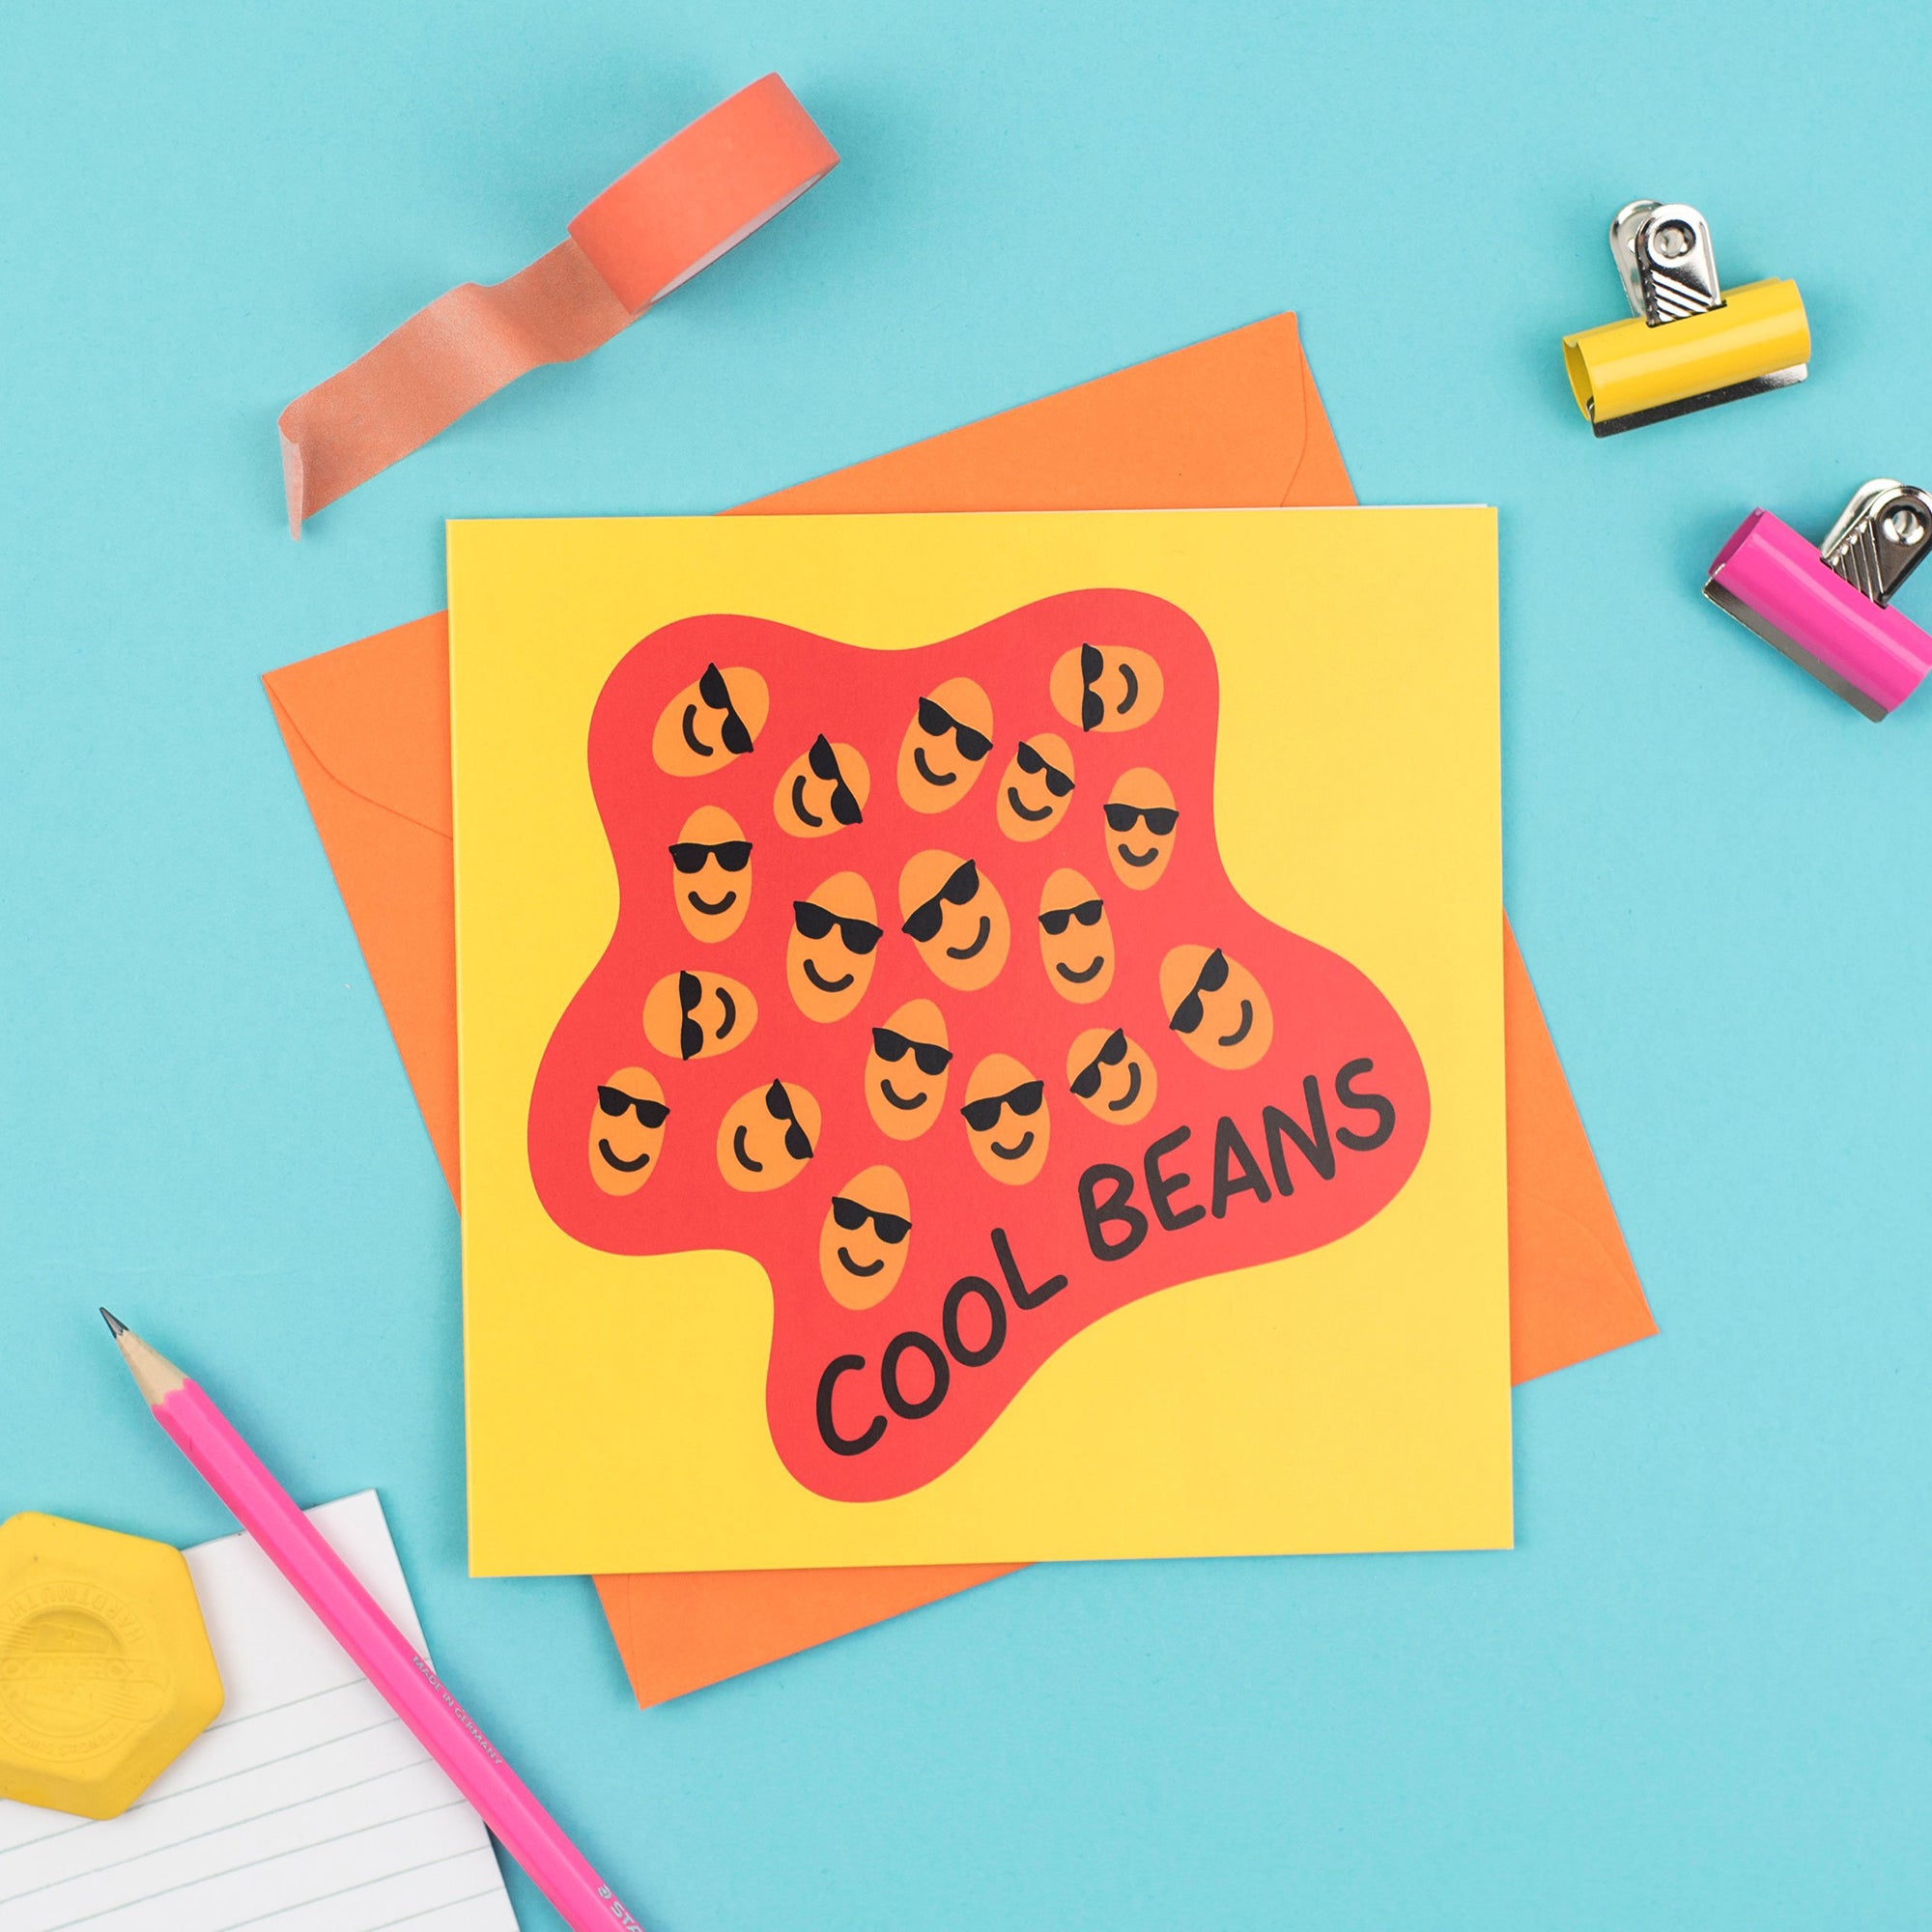 Cool Beans greetings card